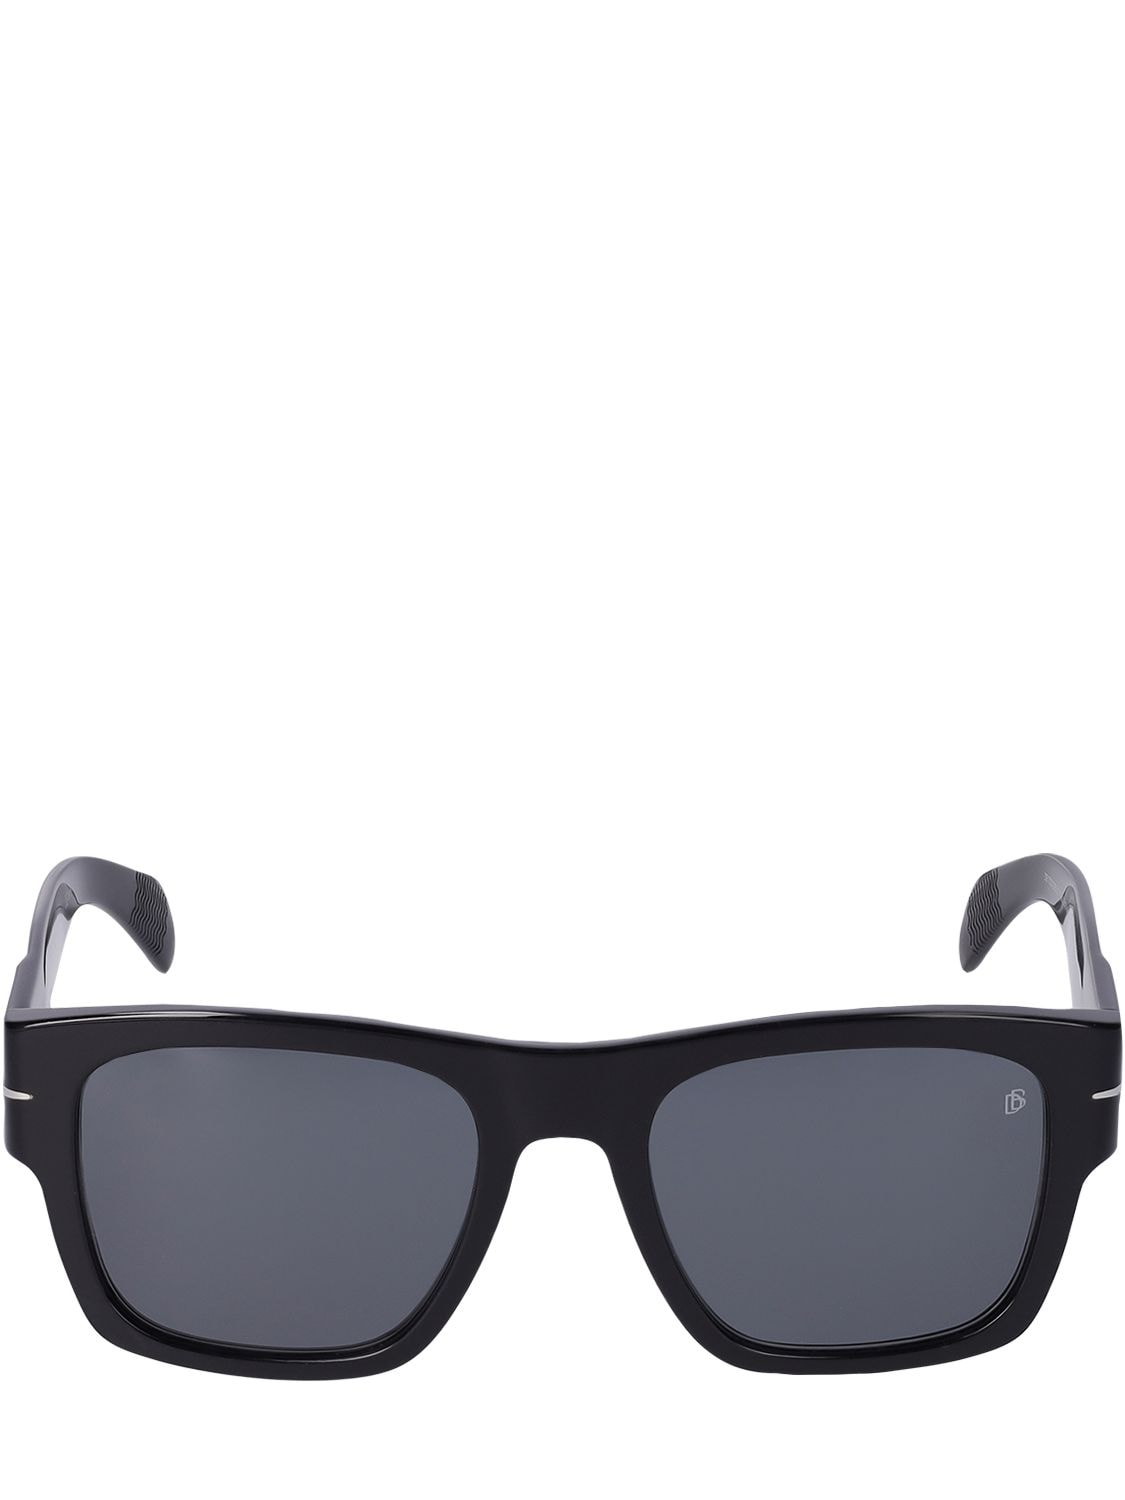 Image of Db Bold Squared Acetate Sunglasses